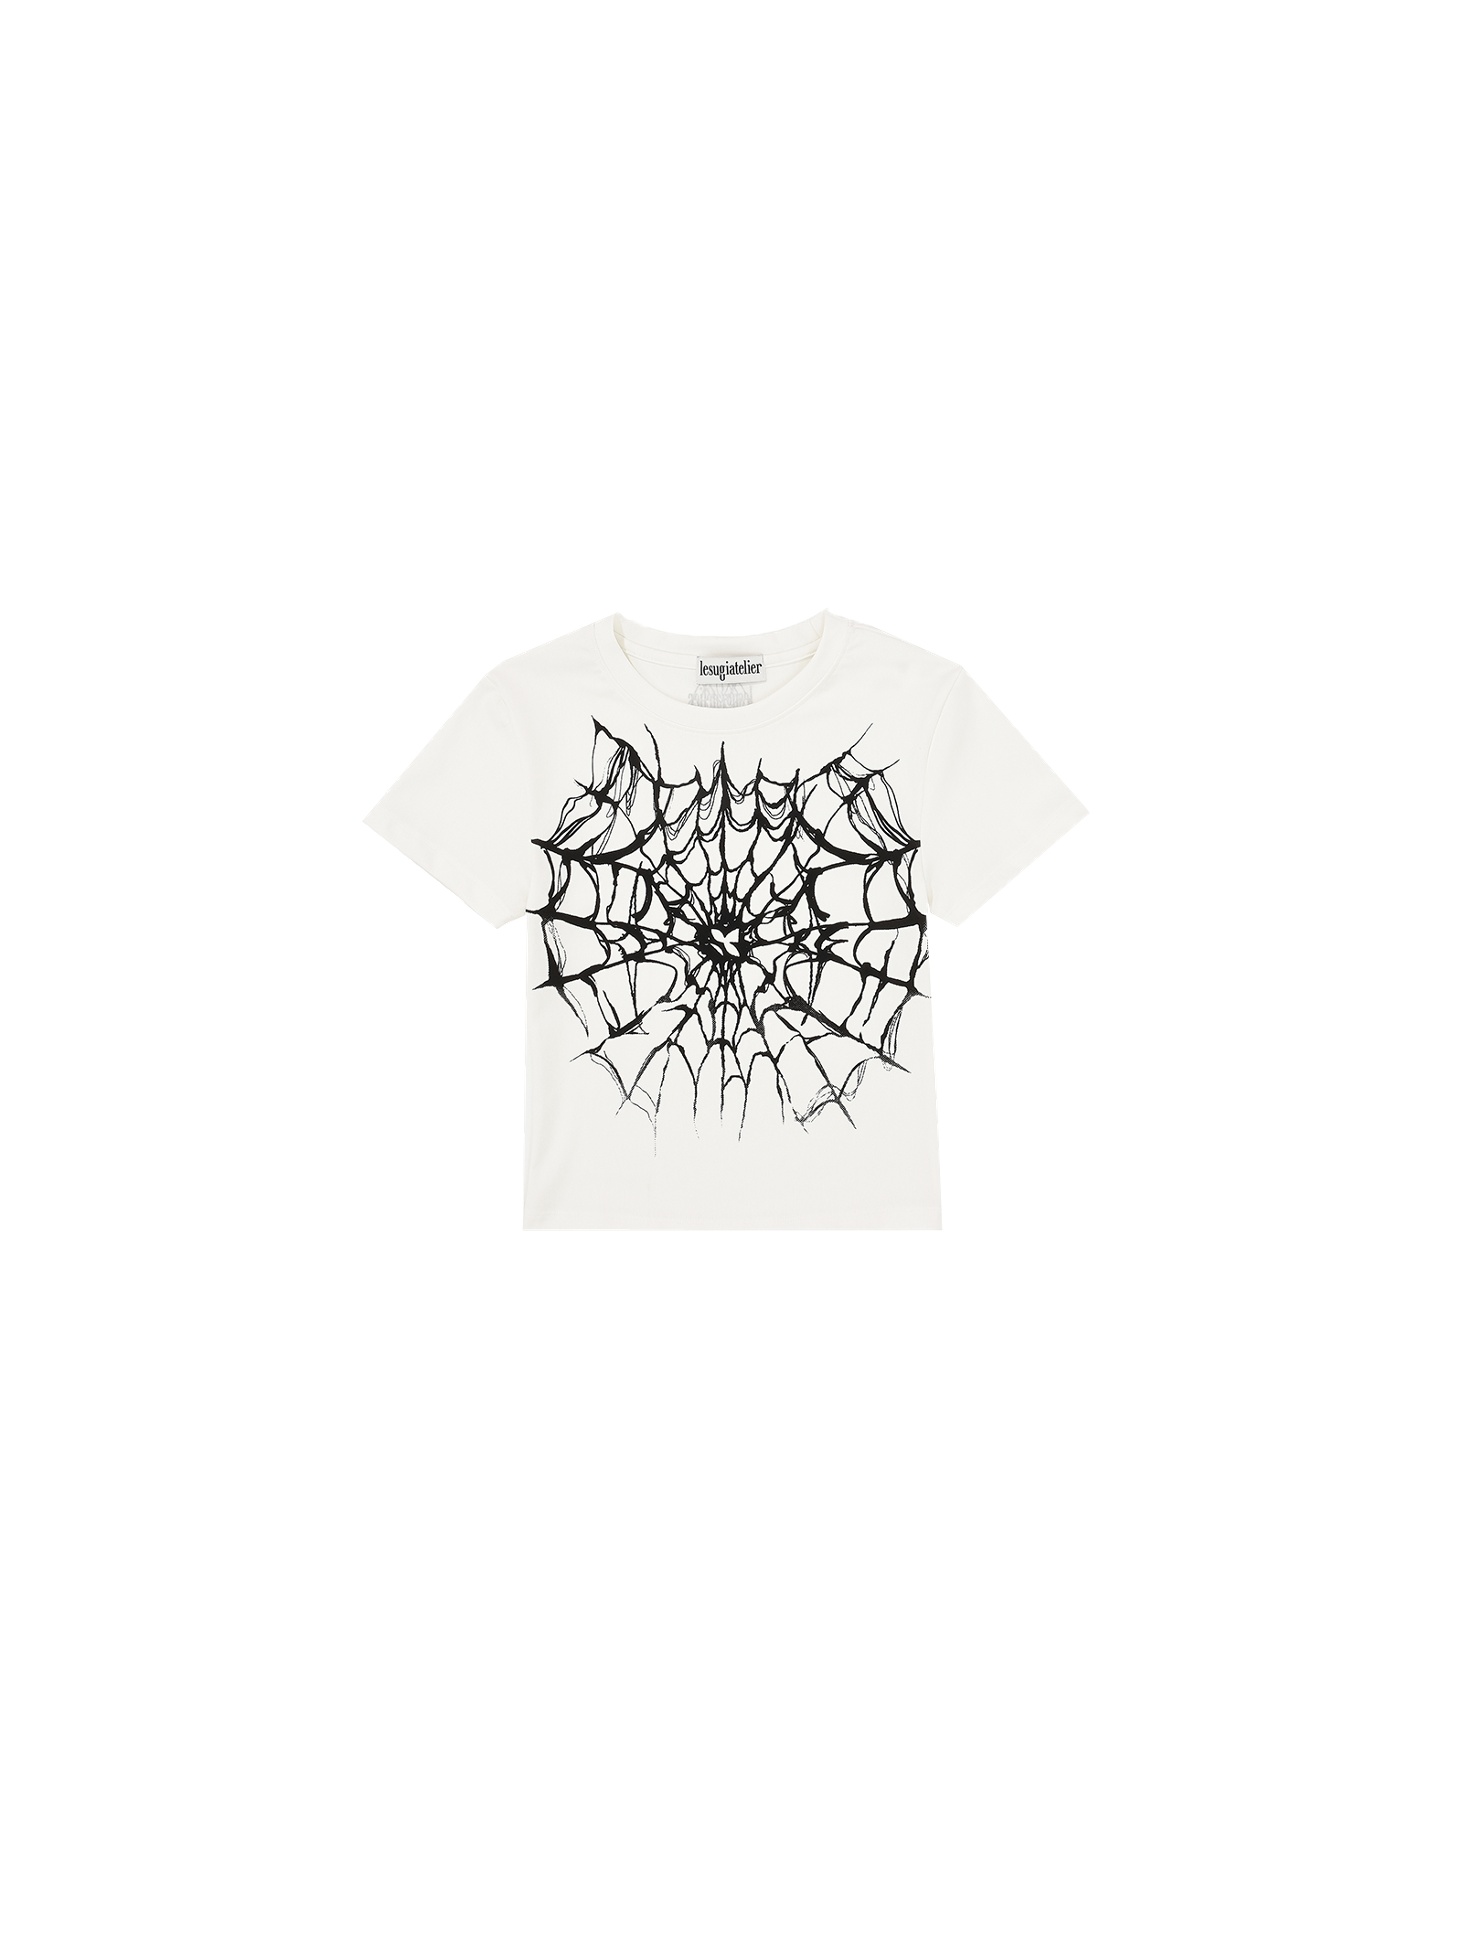 Spider Web Graphic T-Shirt / White